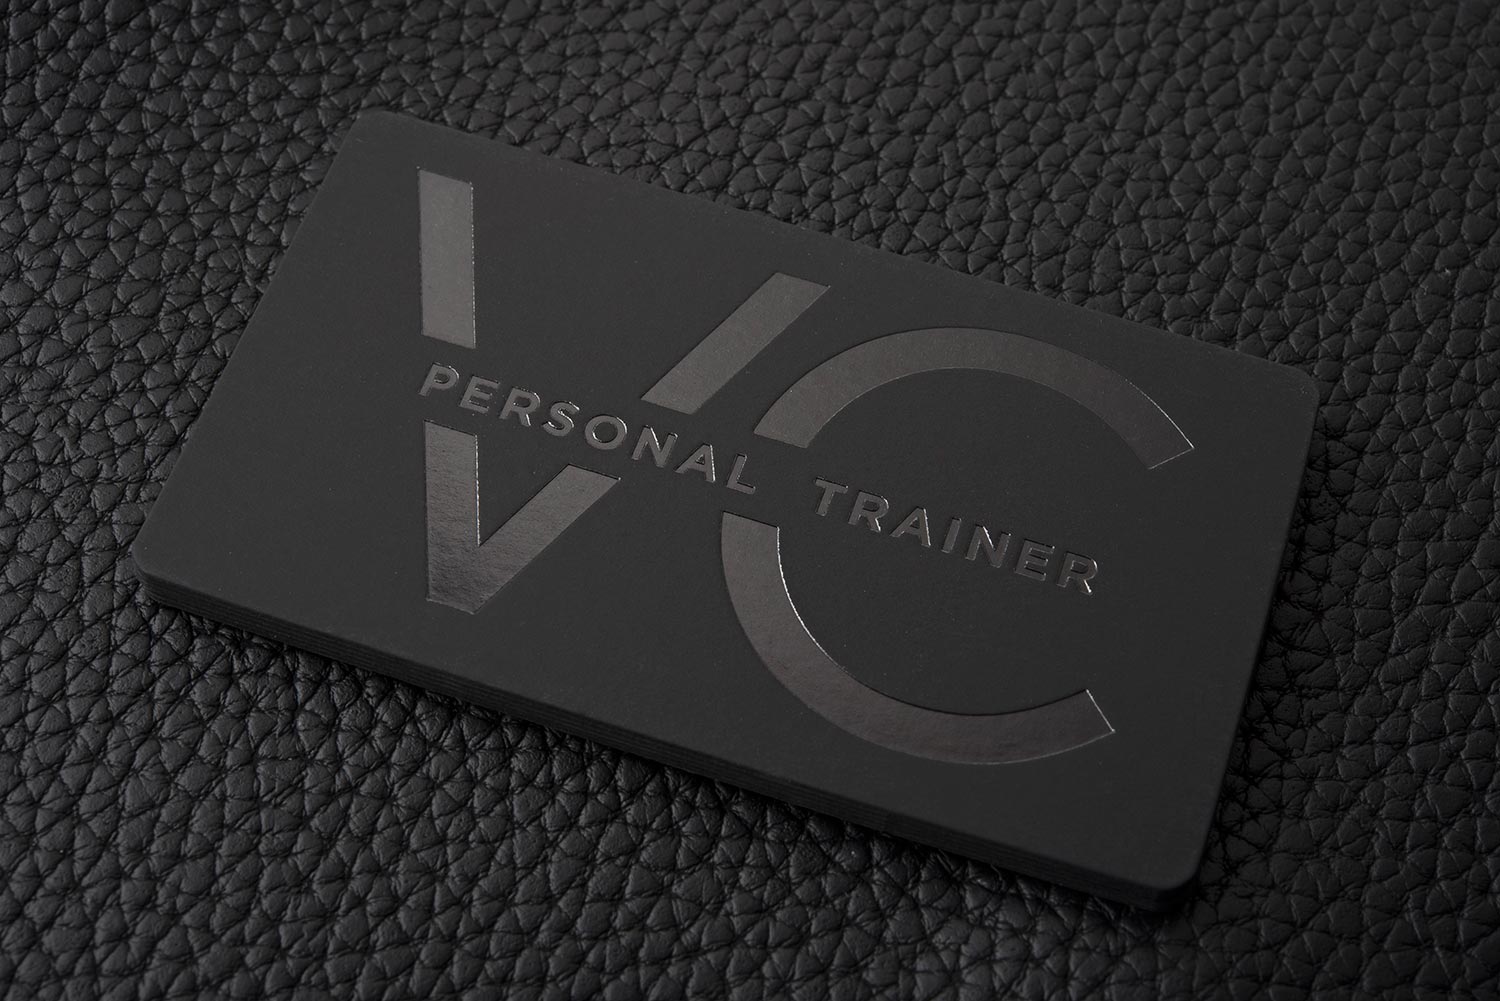 unique personal trainer business cards 2